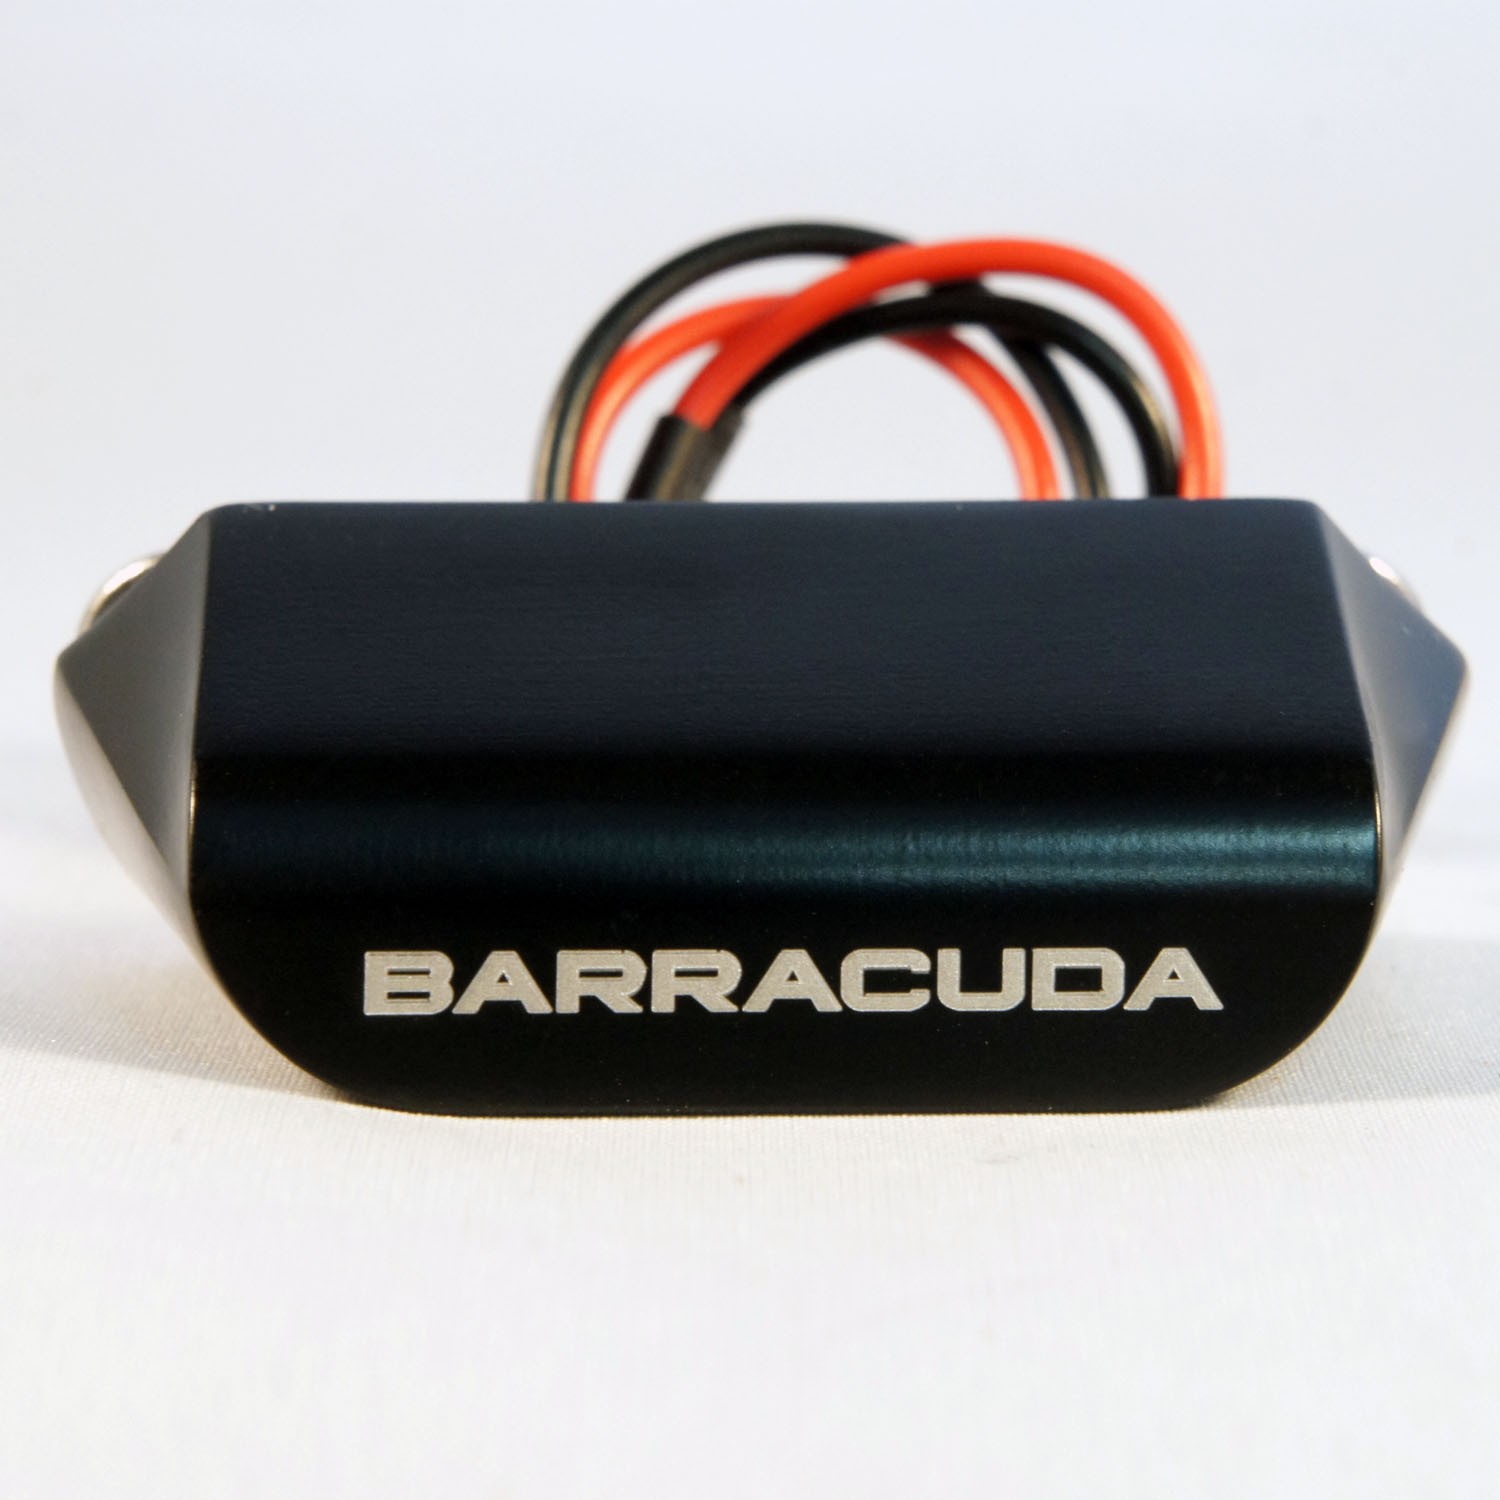 Eclairage de plaque d'immatriculation moto Barracuda LED Vente en Ligne 